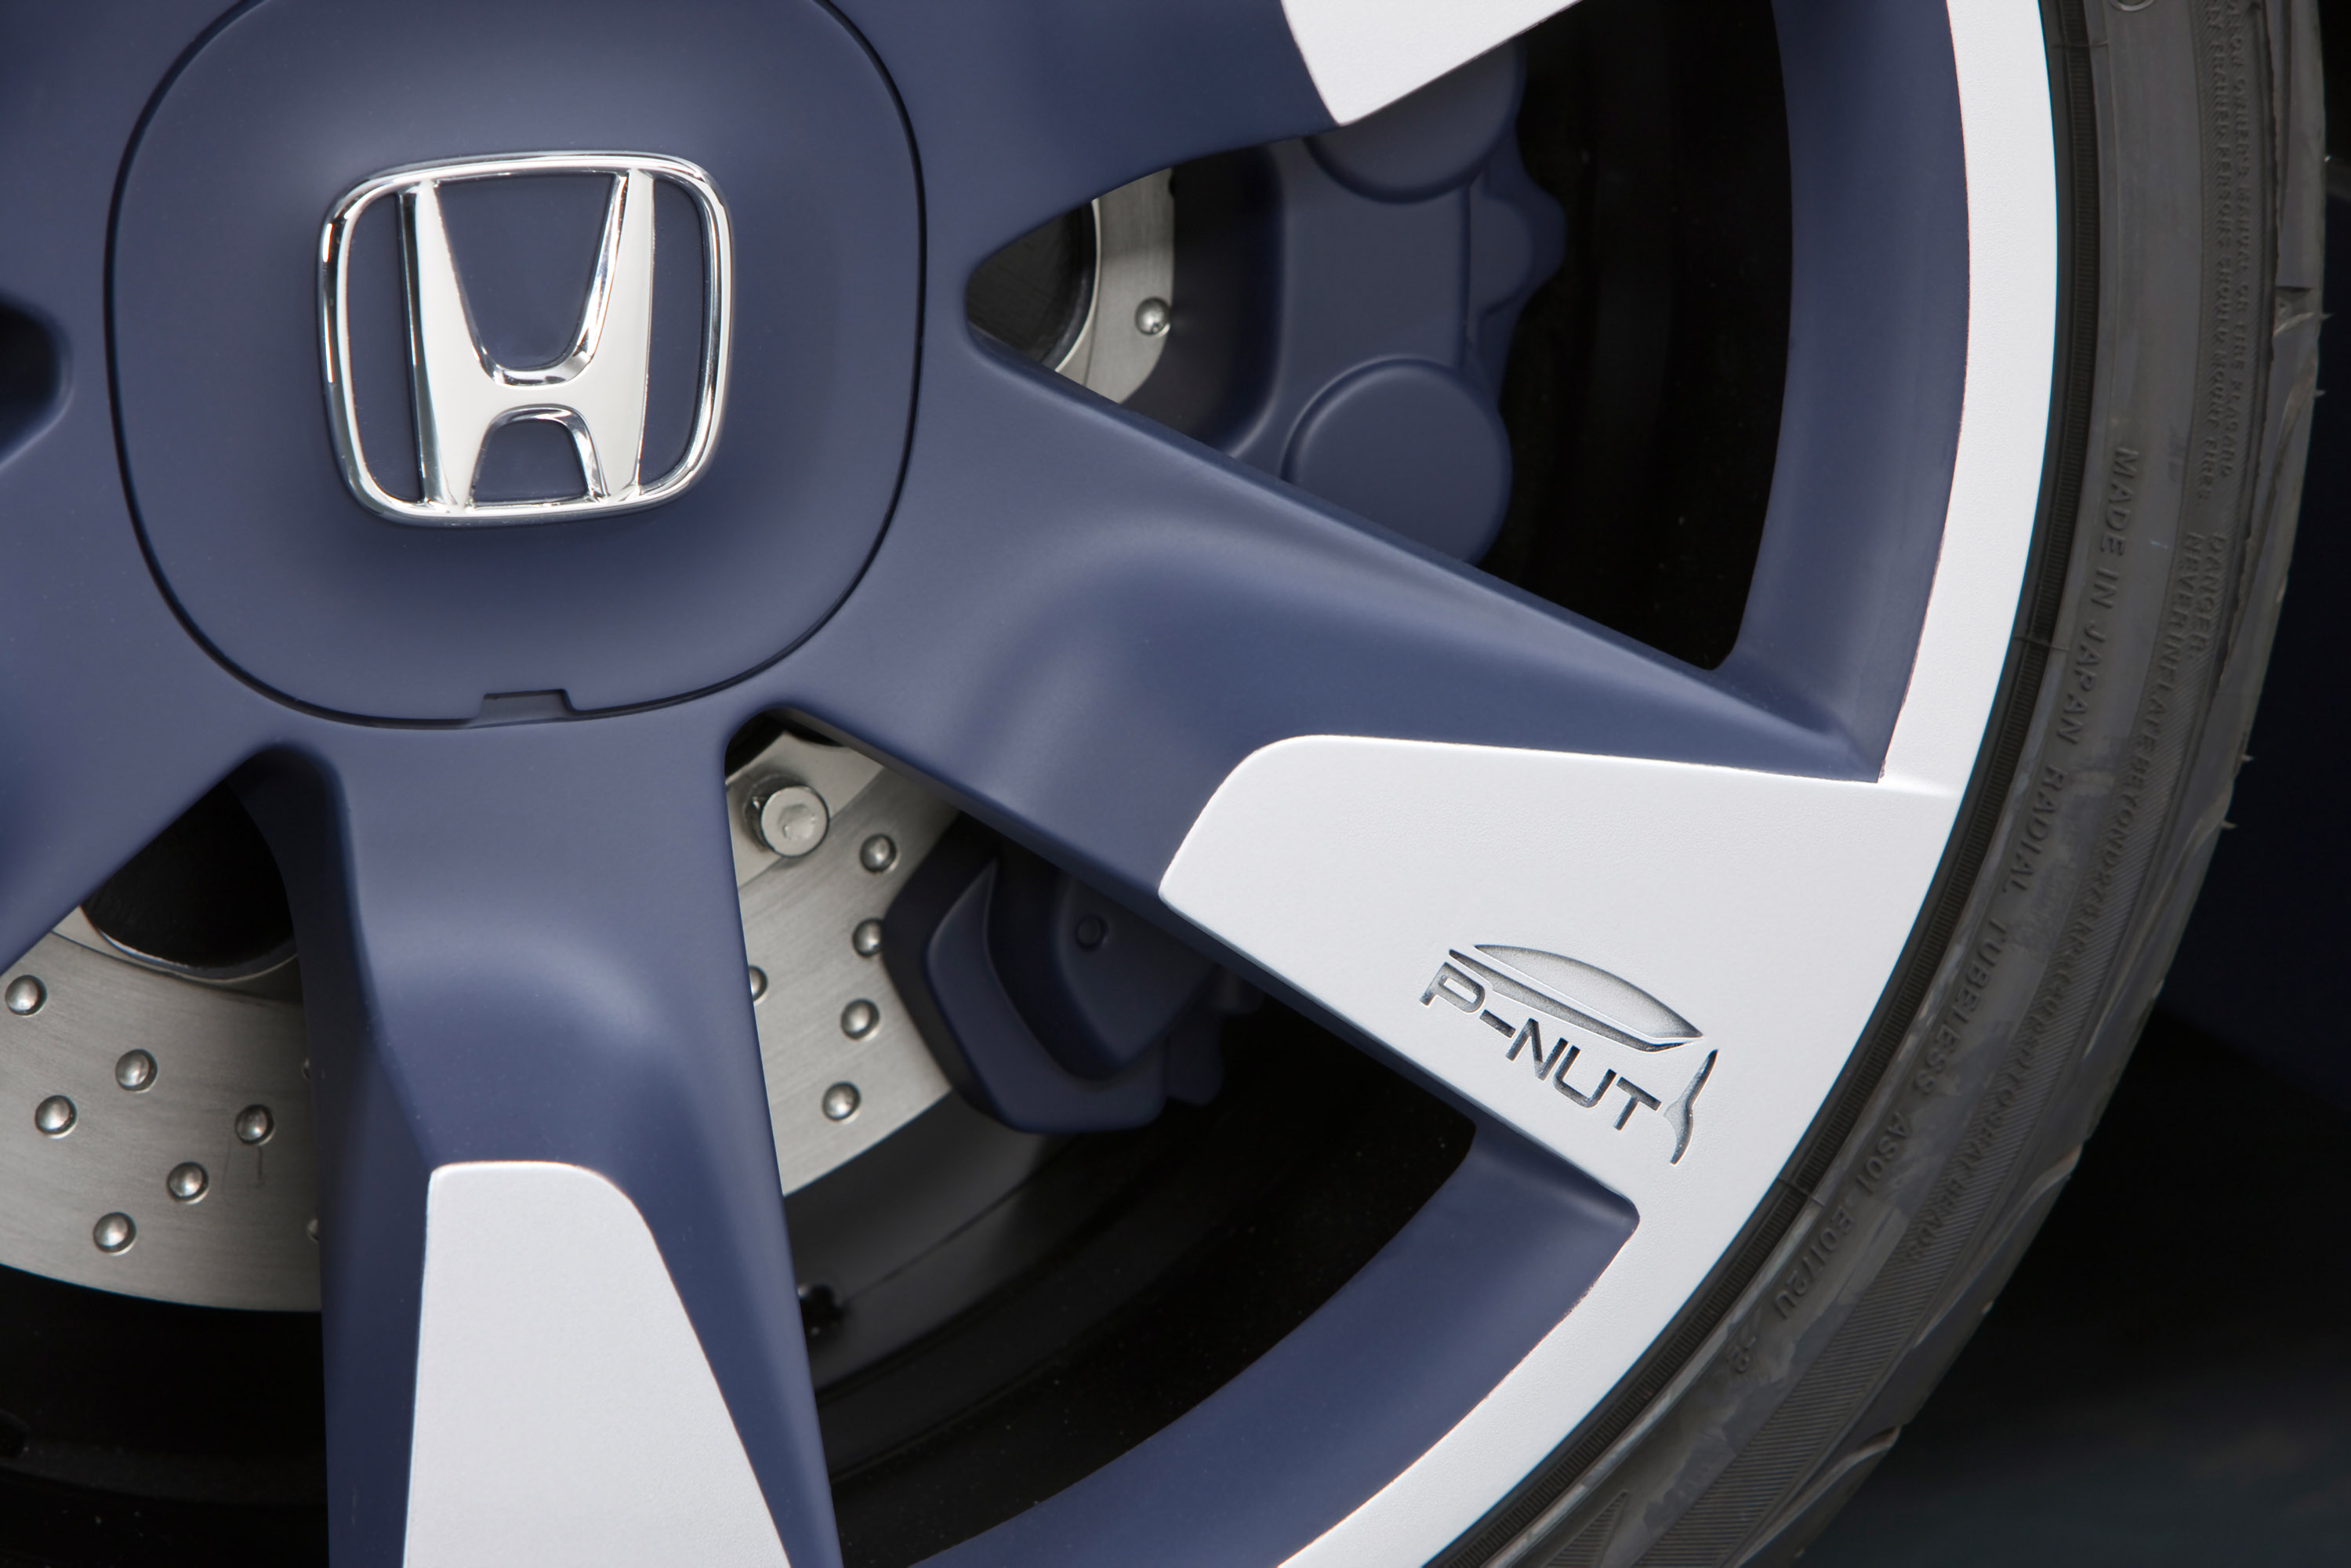 Honda p. Honda p-nut Concept. Small footprint, big Space - Honda p-nut Concept.